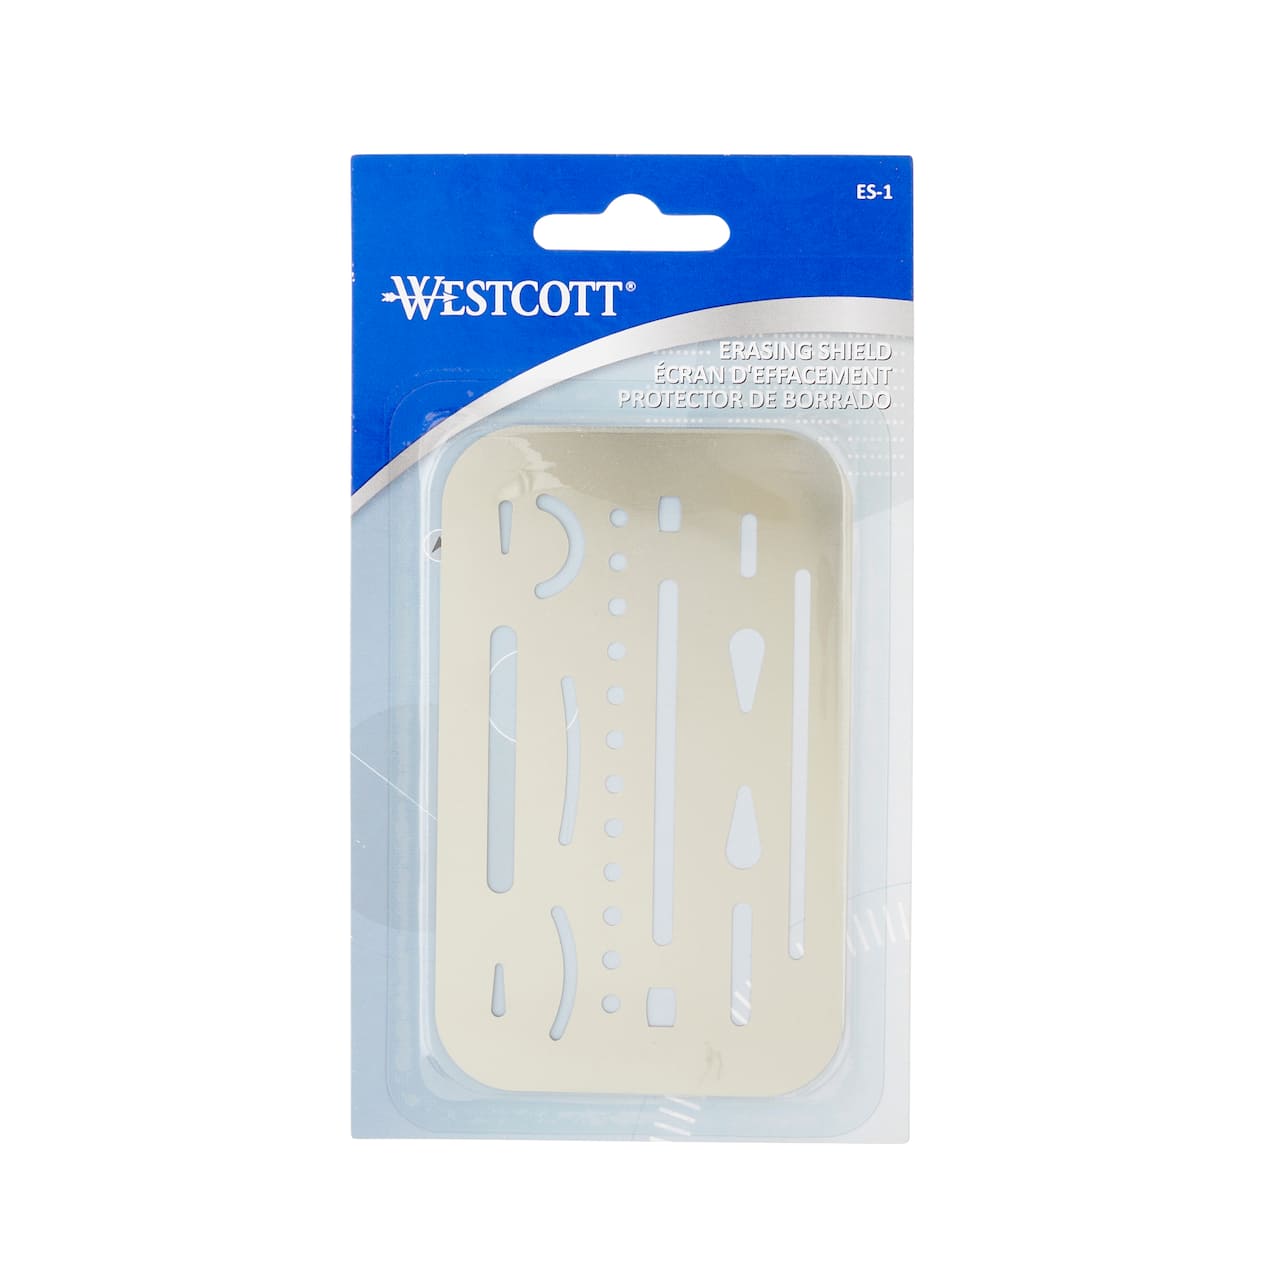 24 Pack: Westcott&#x2122; Erasing Shield